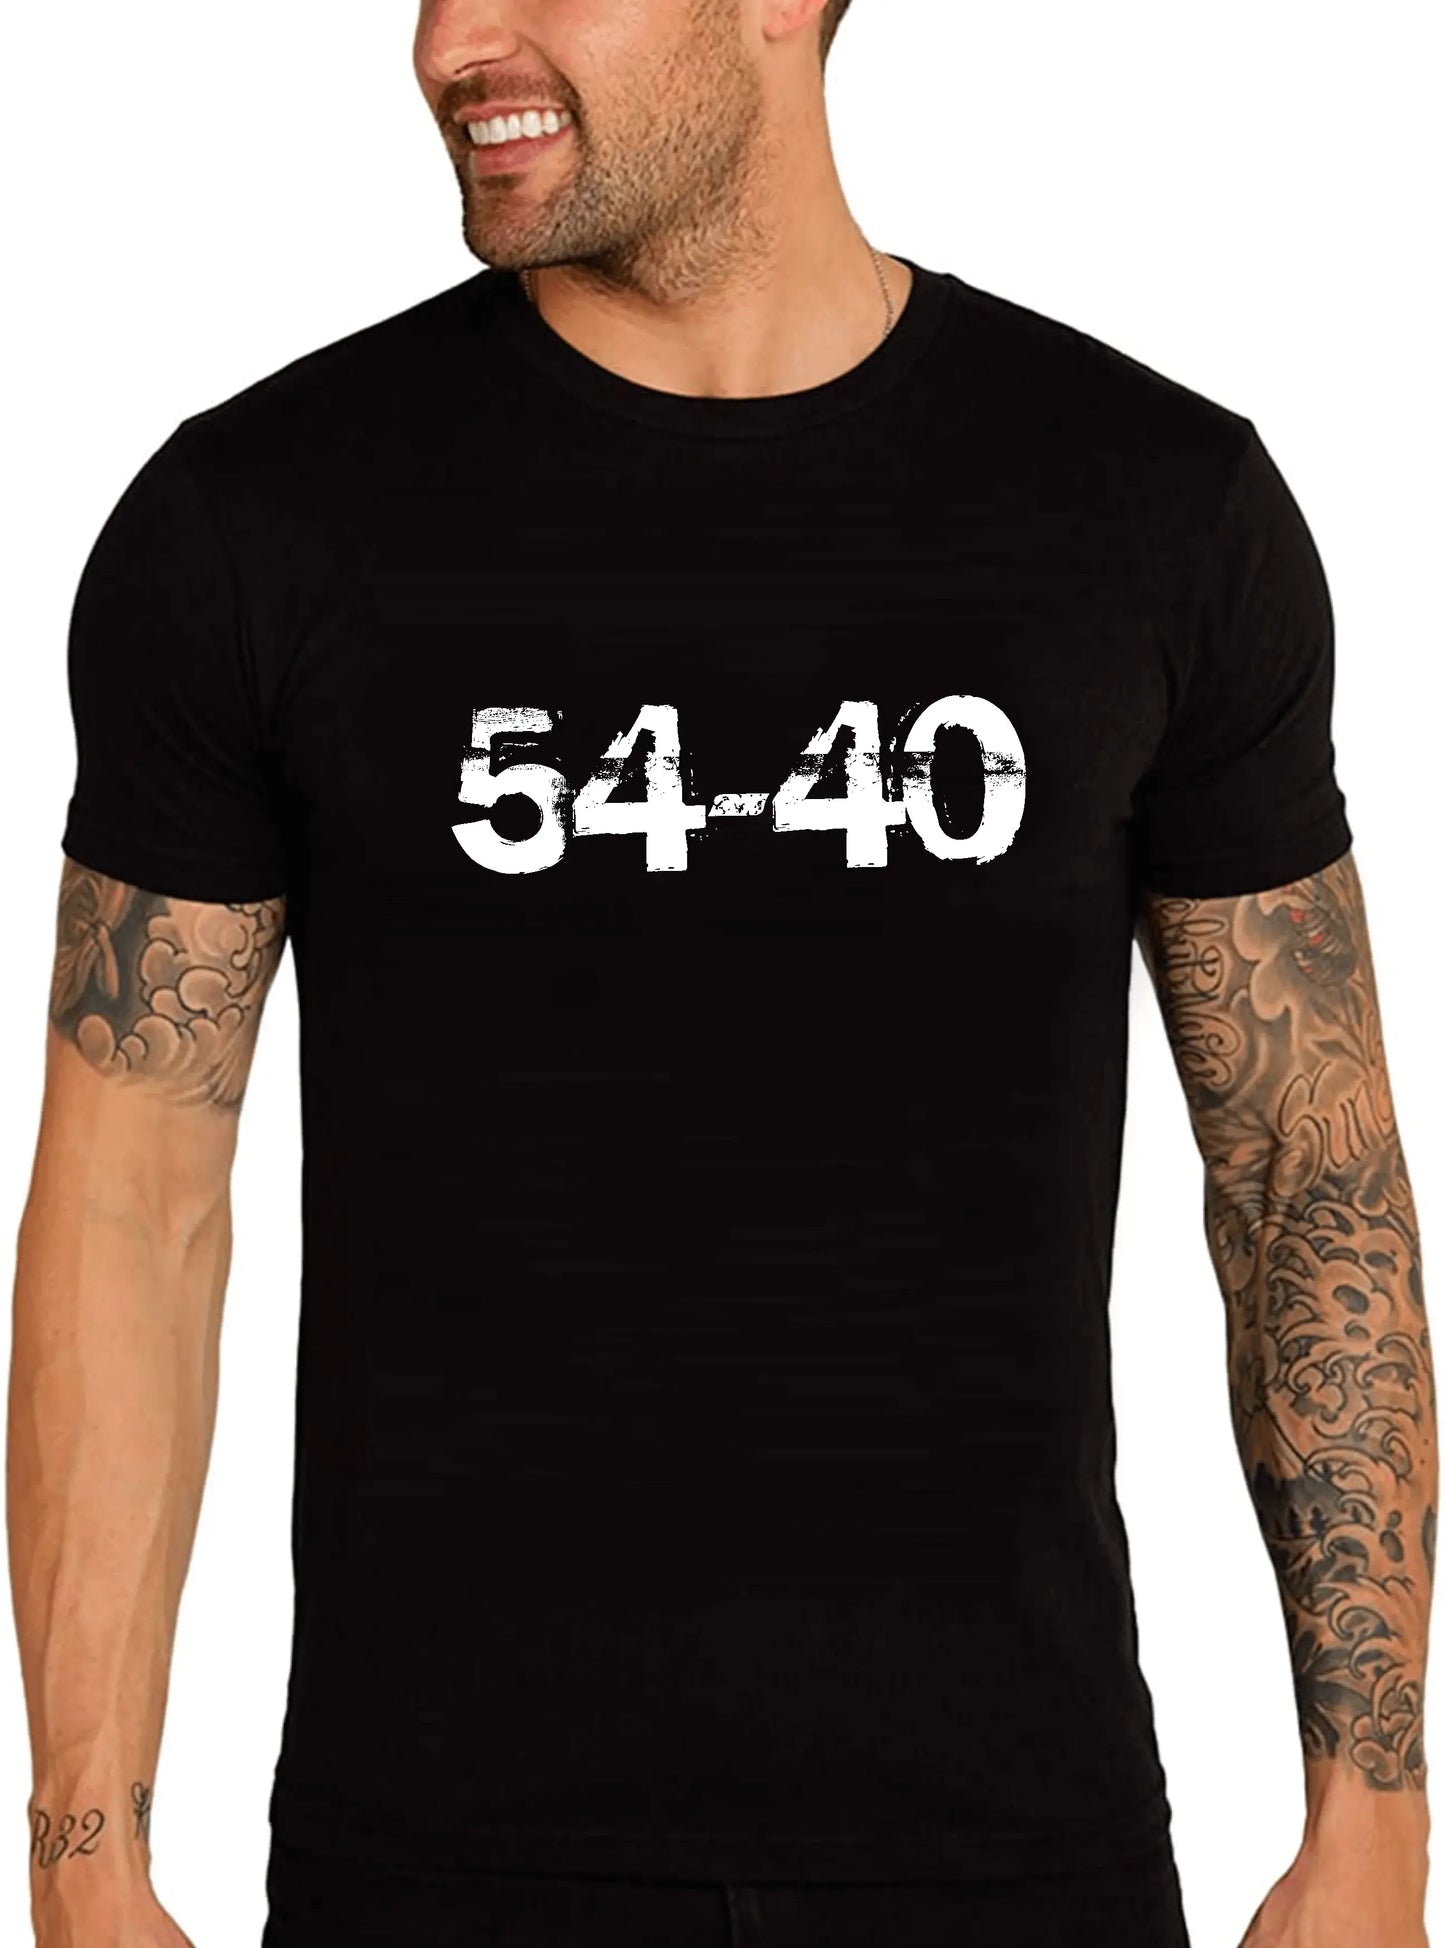 Men's Graphic T-Shirt Alt Rock Bands 5440